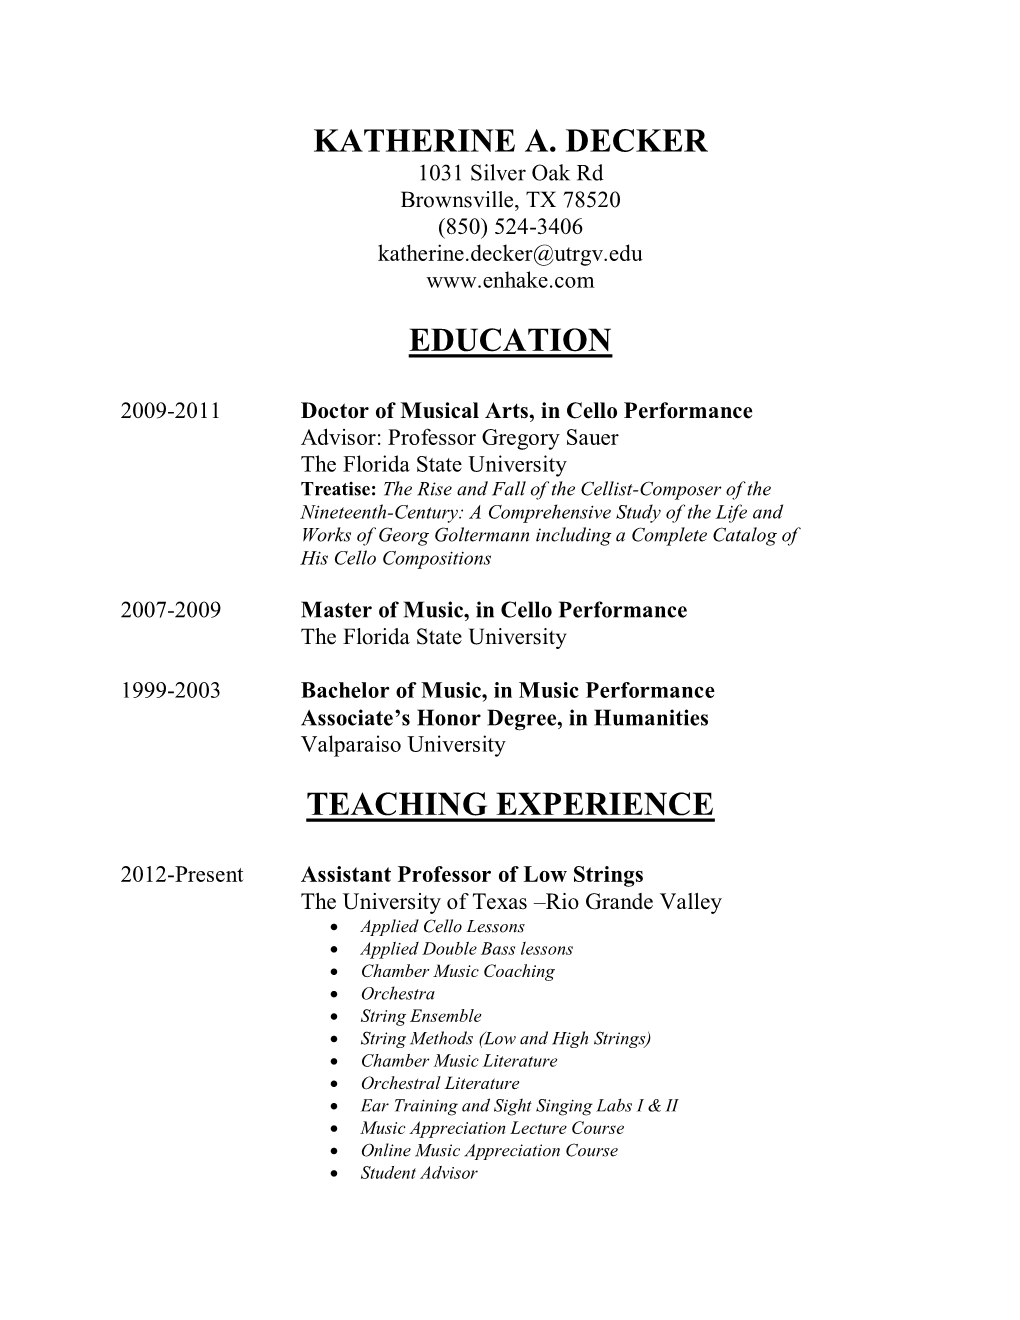 Katherine A. Decker Education Teaching Experience